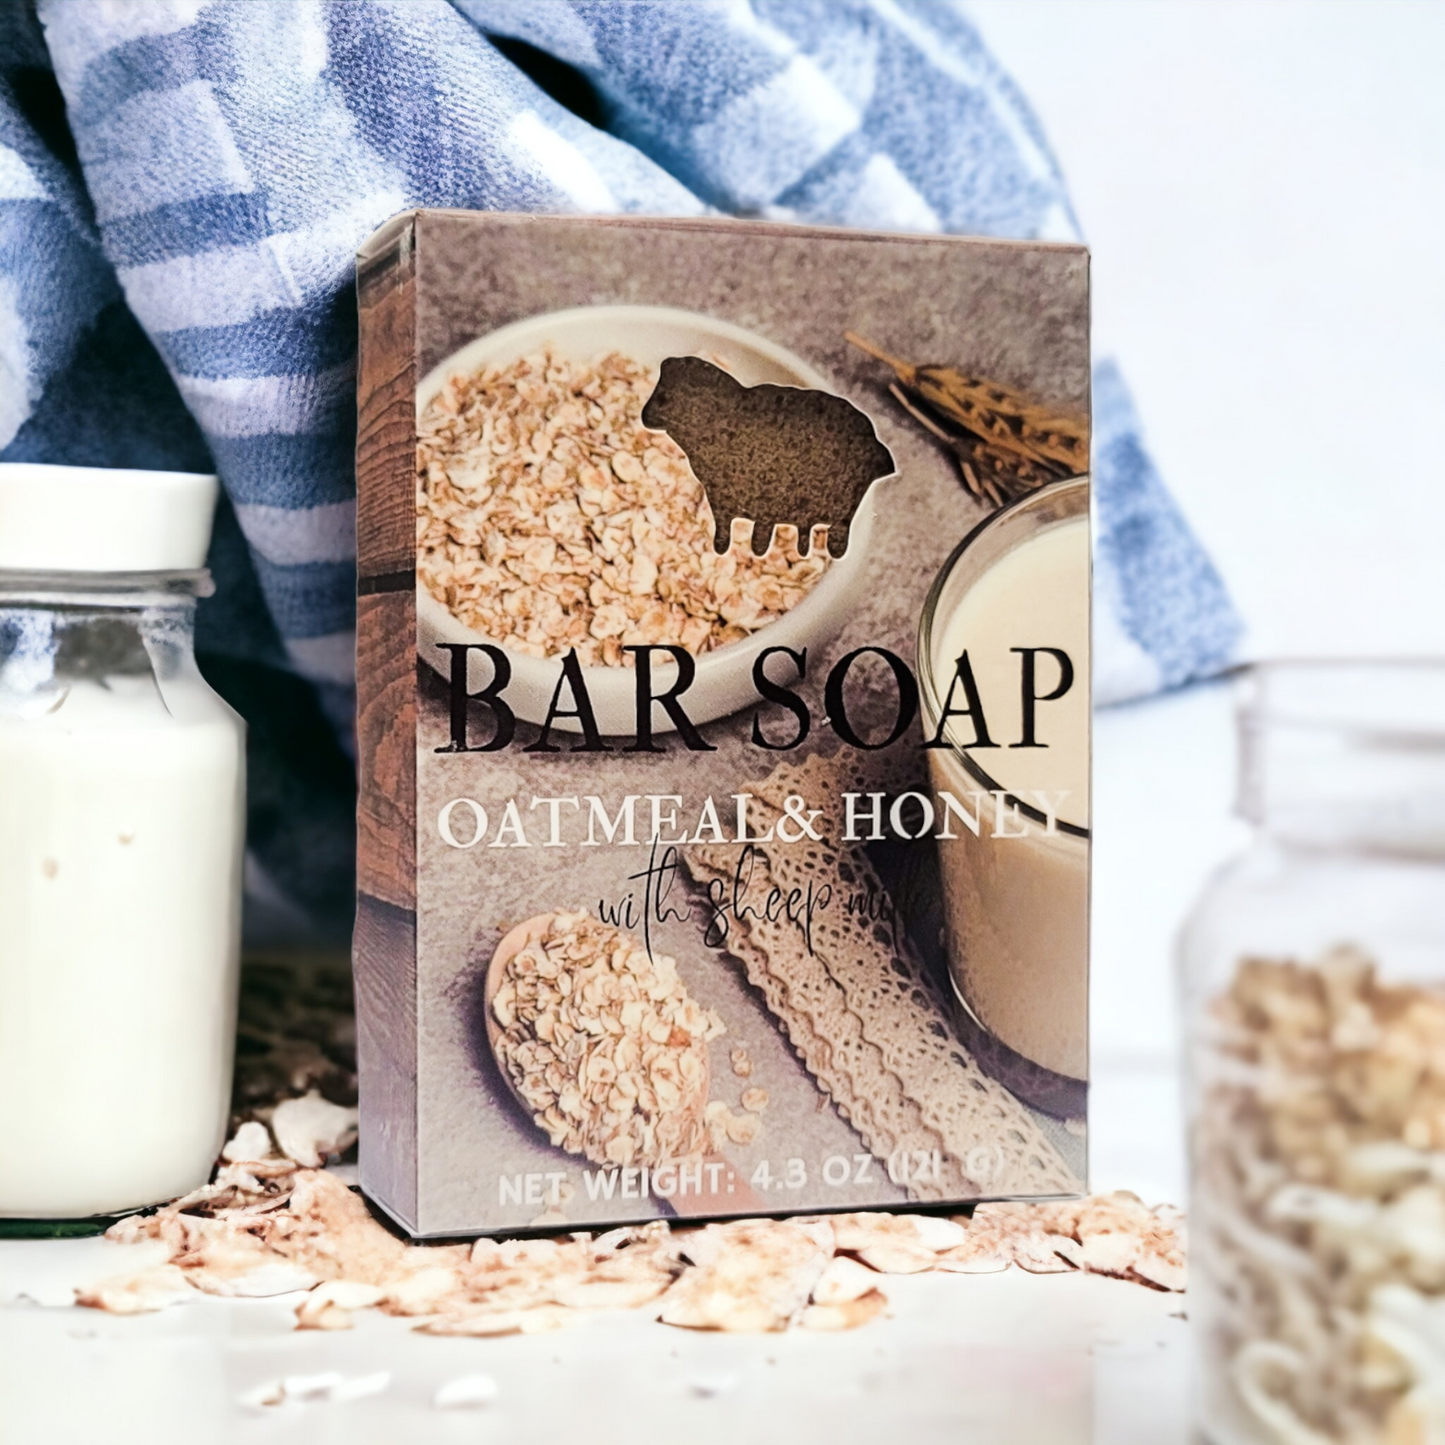 Oatmeal & Honey Bar Soap with Sheep Milk